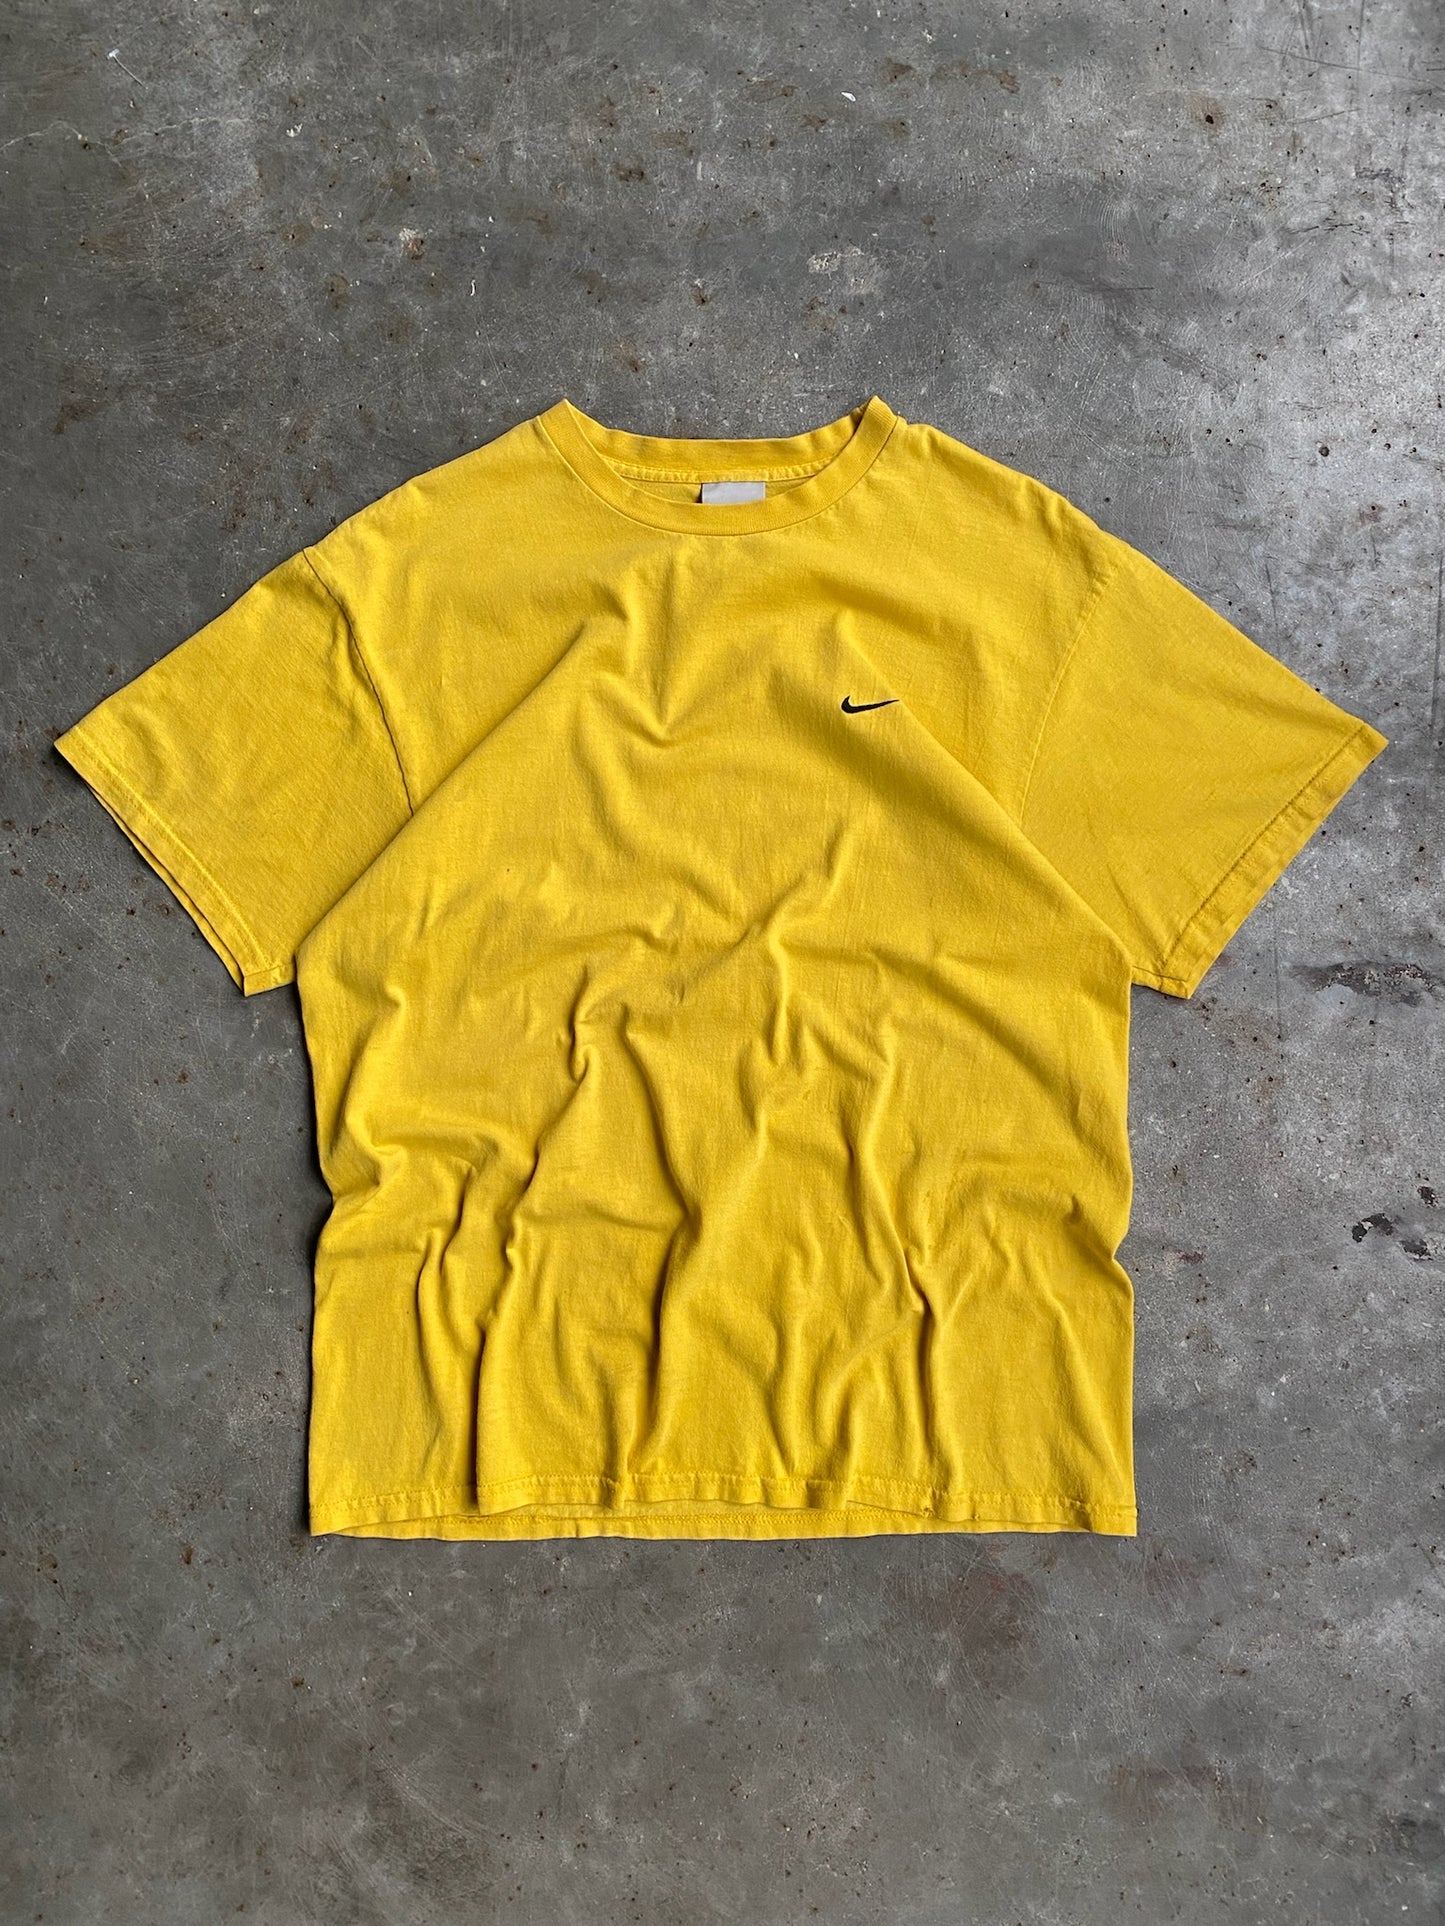 Vintage Y2K Nike Yellow Shirt - L